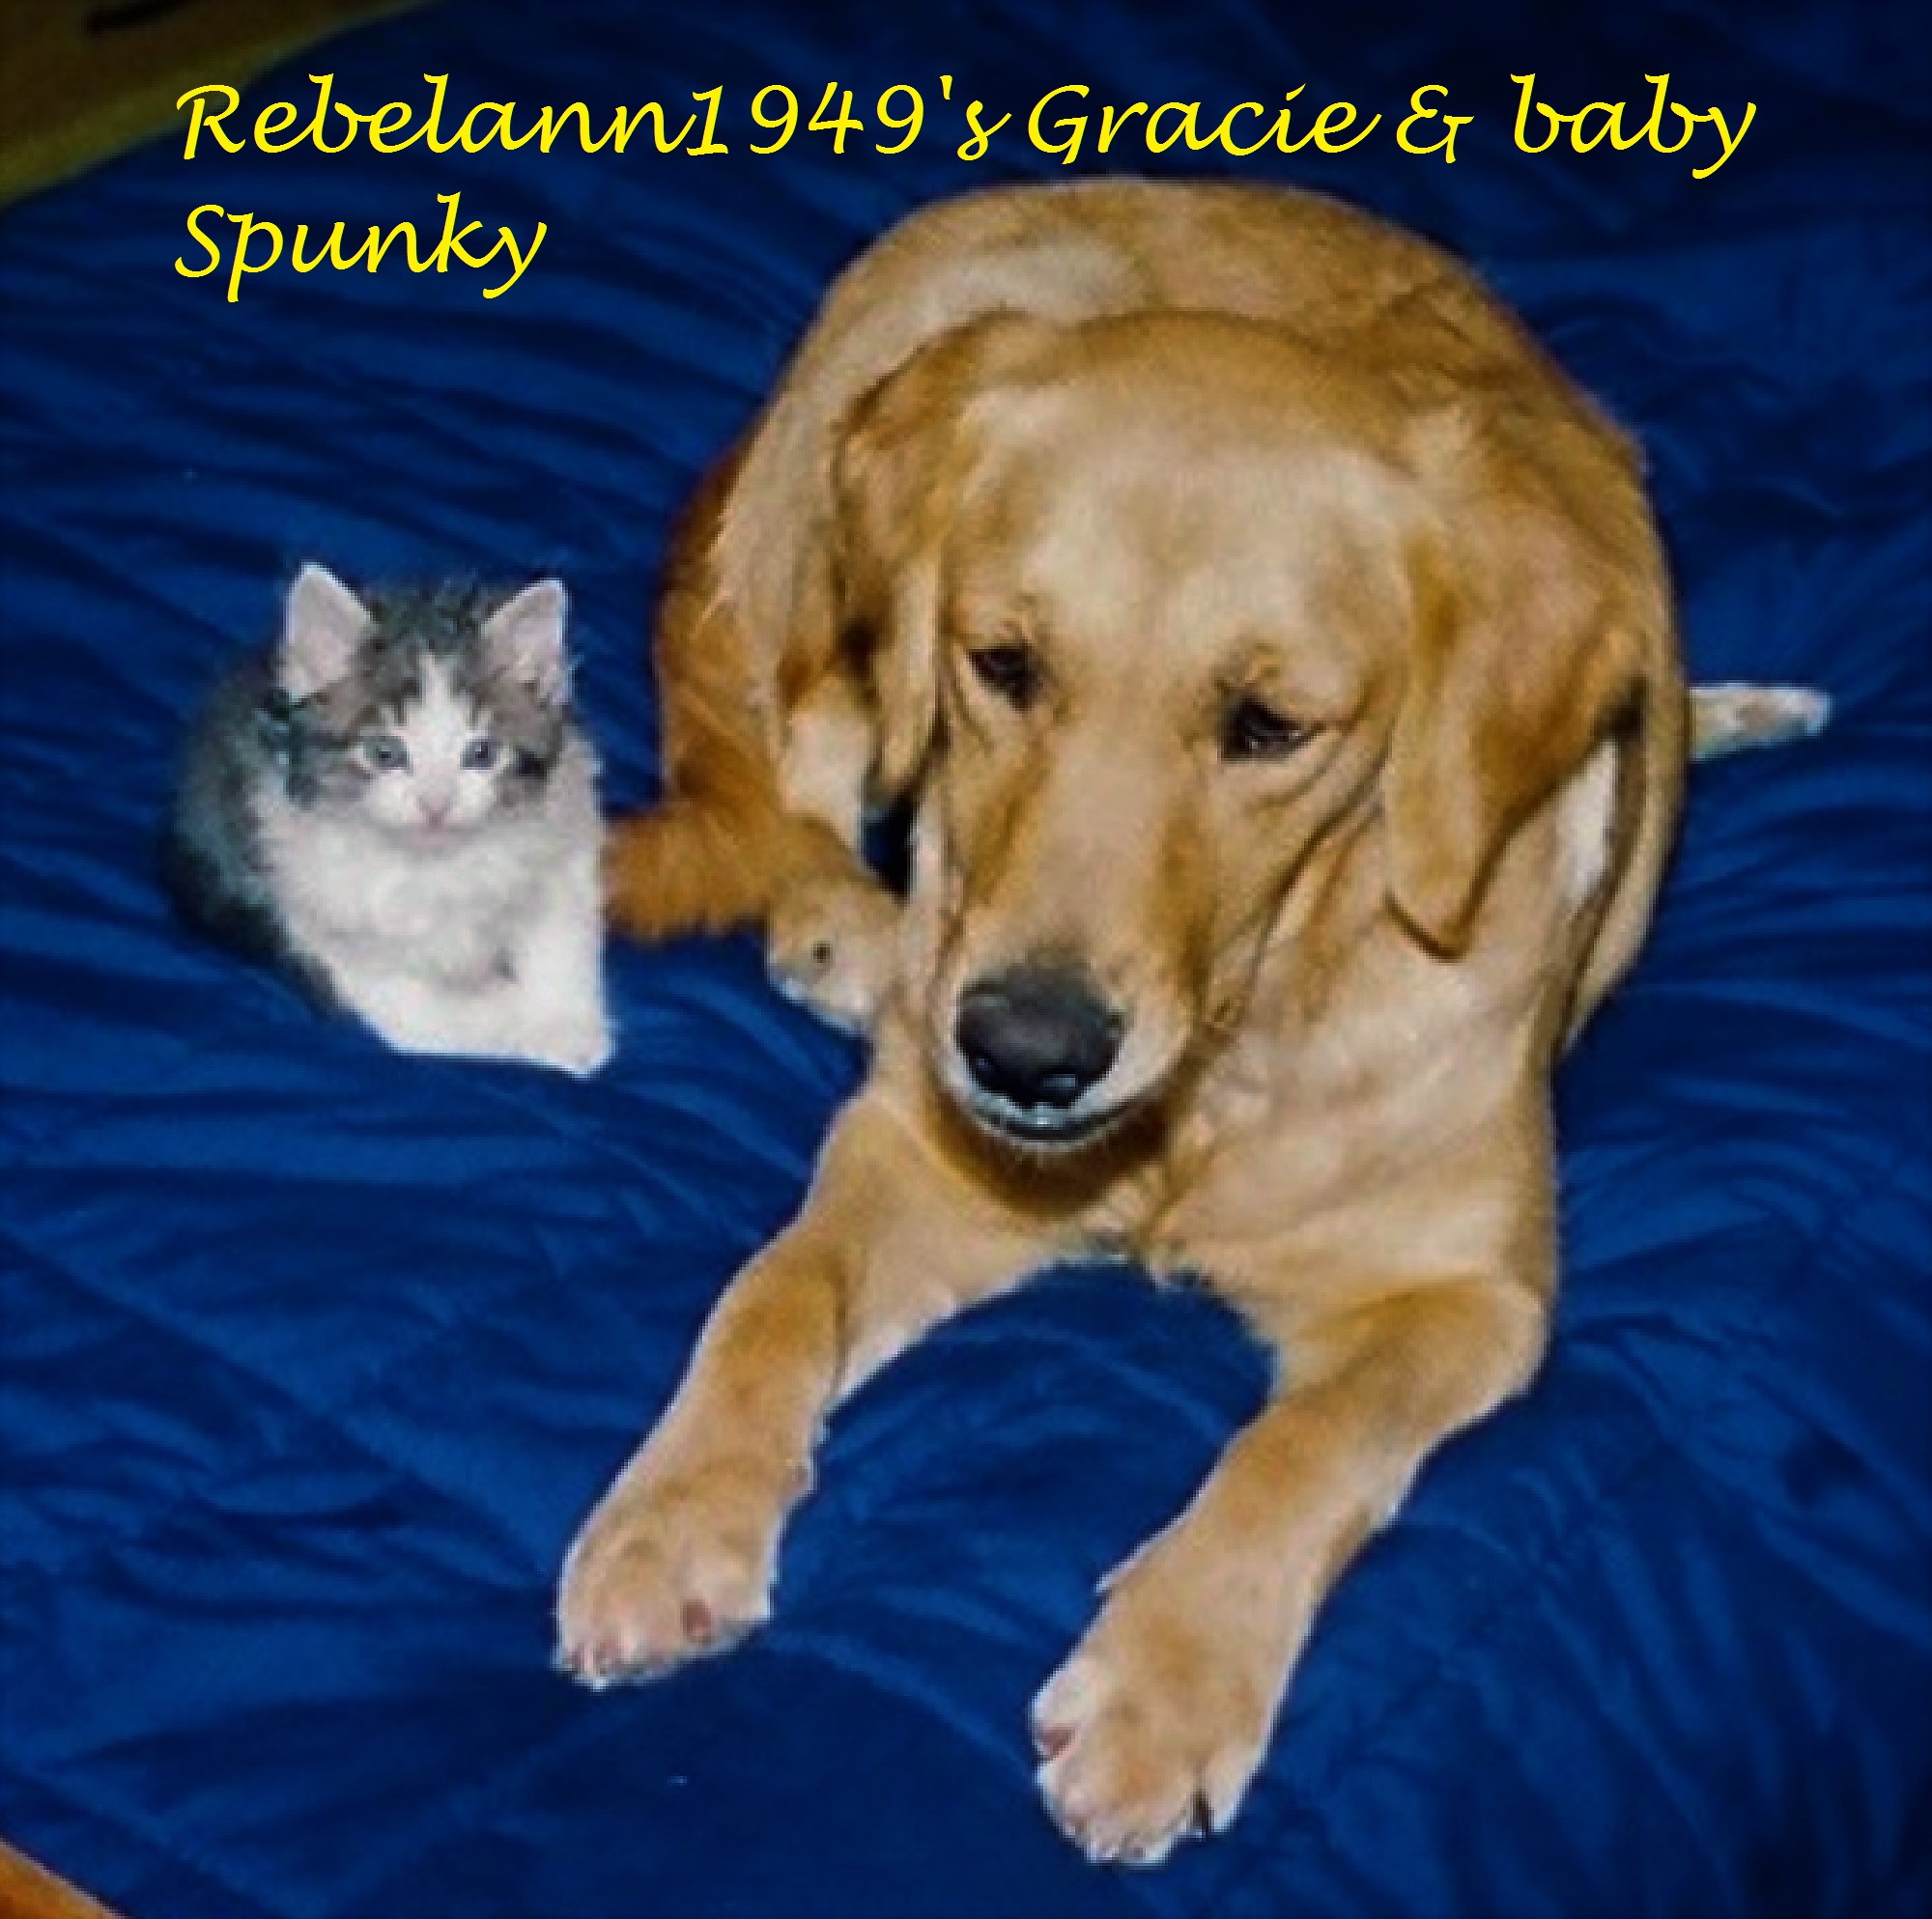 Gracie with her baby, Spunky.